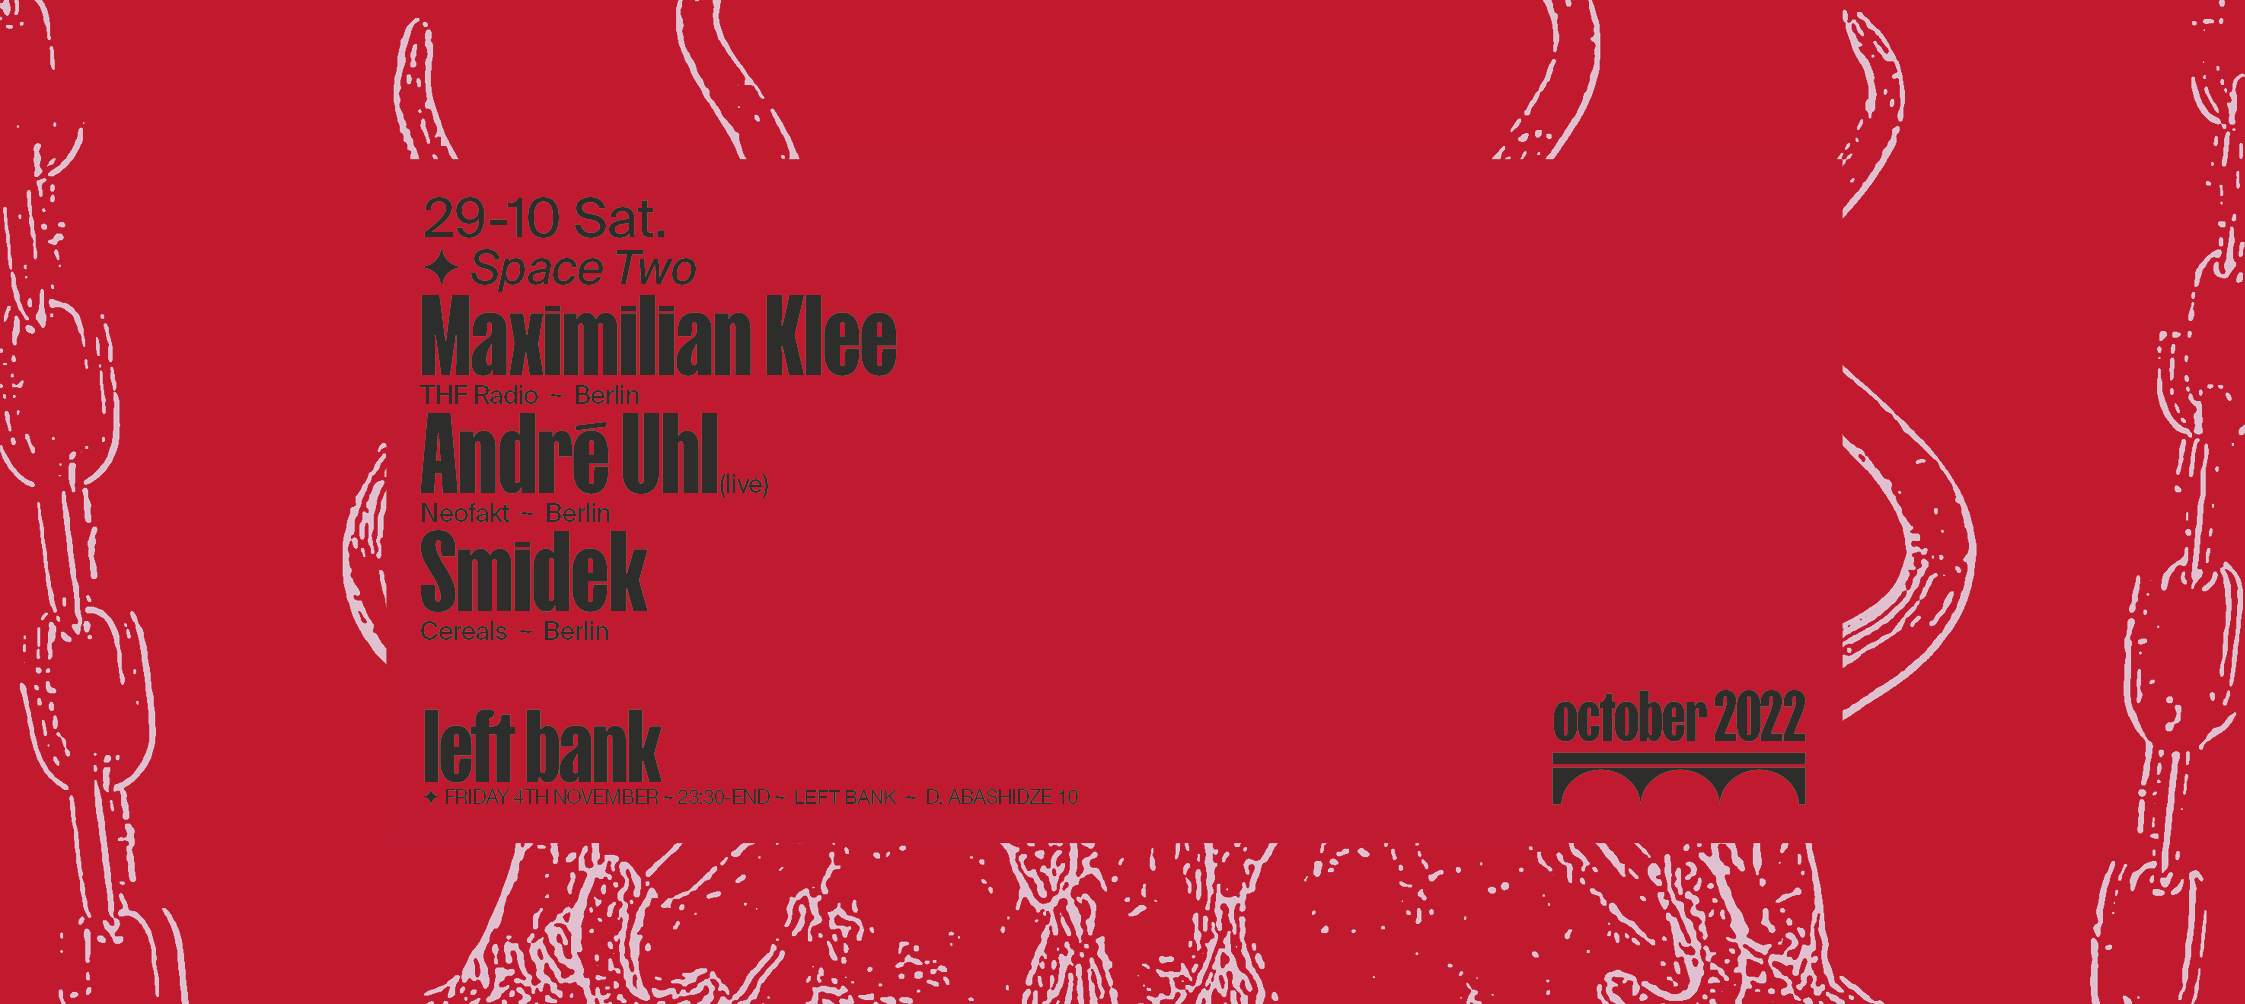 Clubnight: ✦ Maximilian Klee ✦ André Uhl ✦ Smidek - フライヤー表